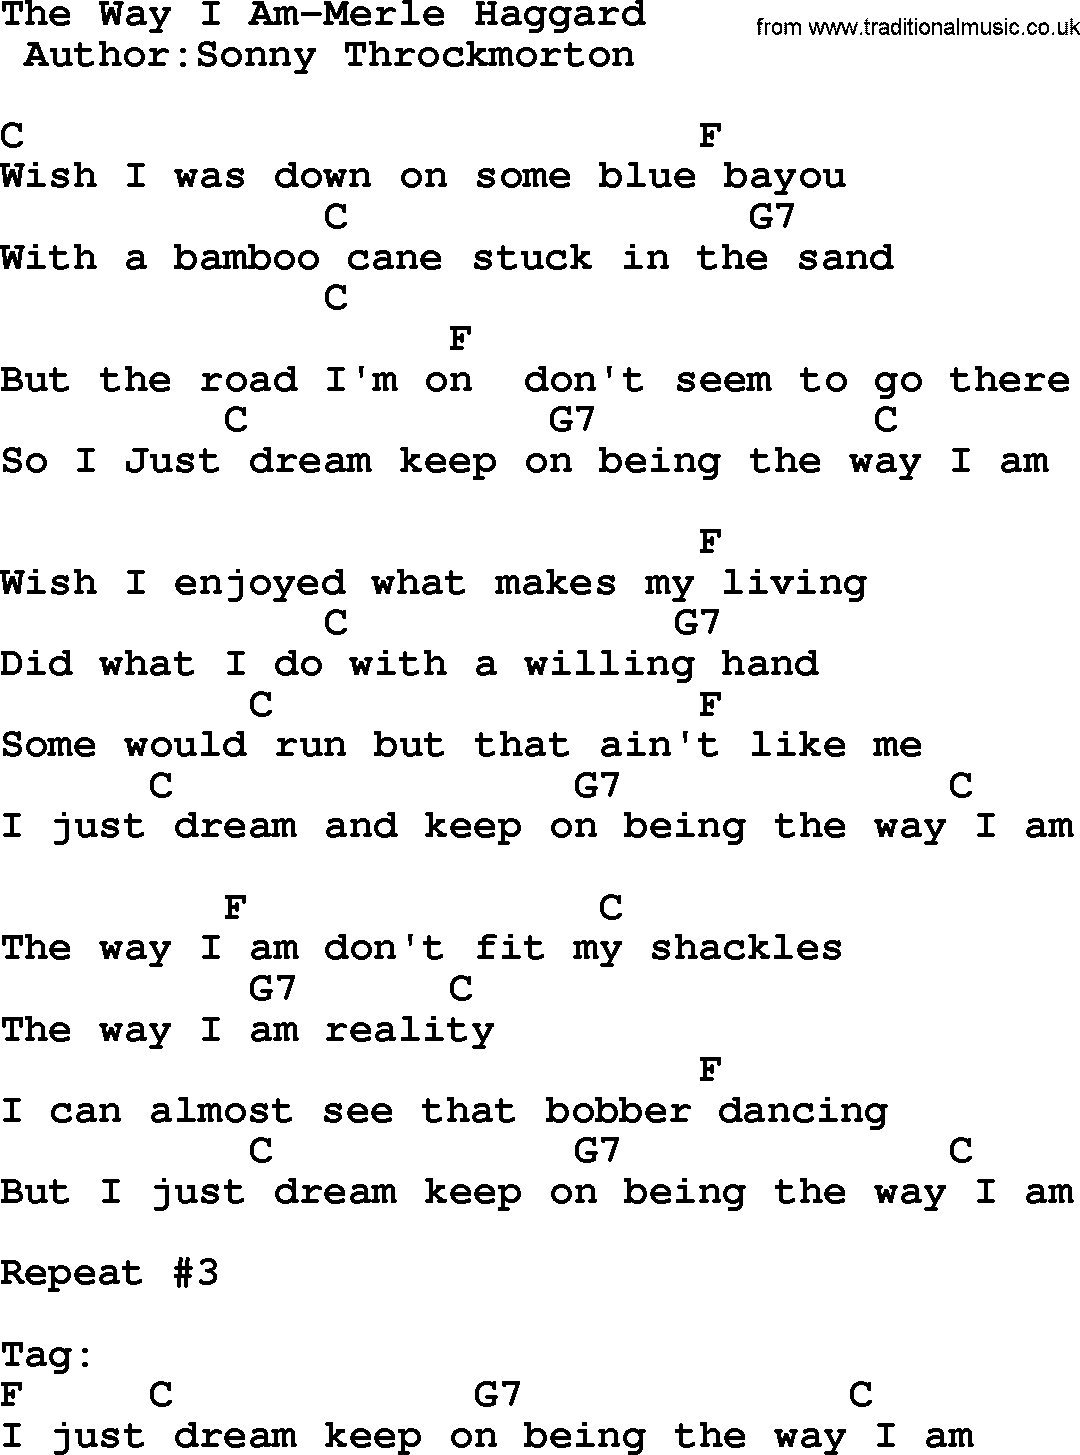 Country music song: The Way I Am-Merle Haggard lyrics and chords